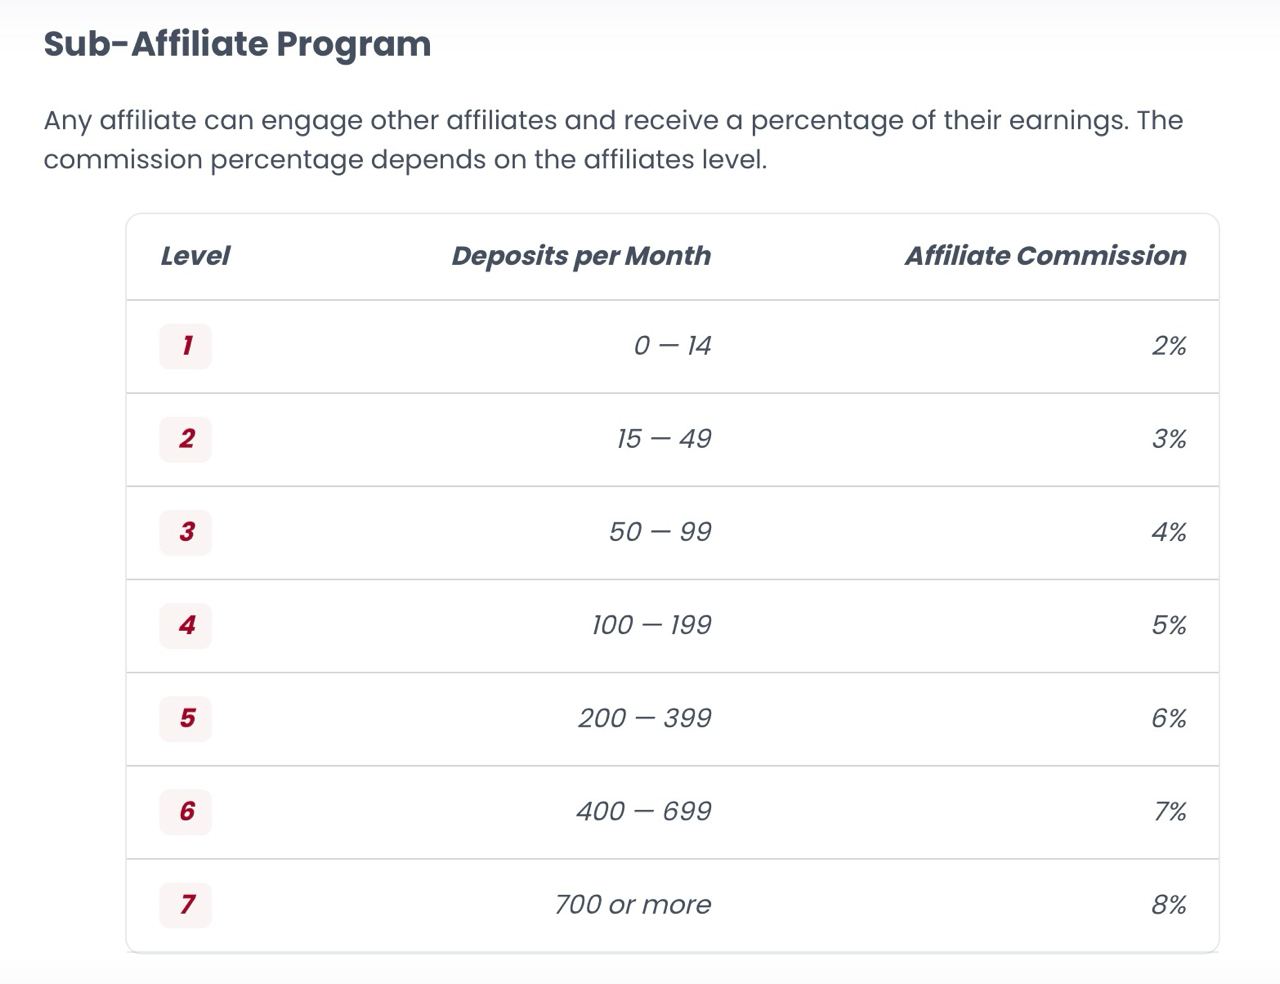 levels of the sub-affiliate program